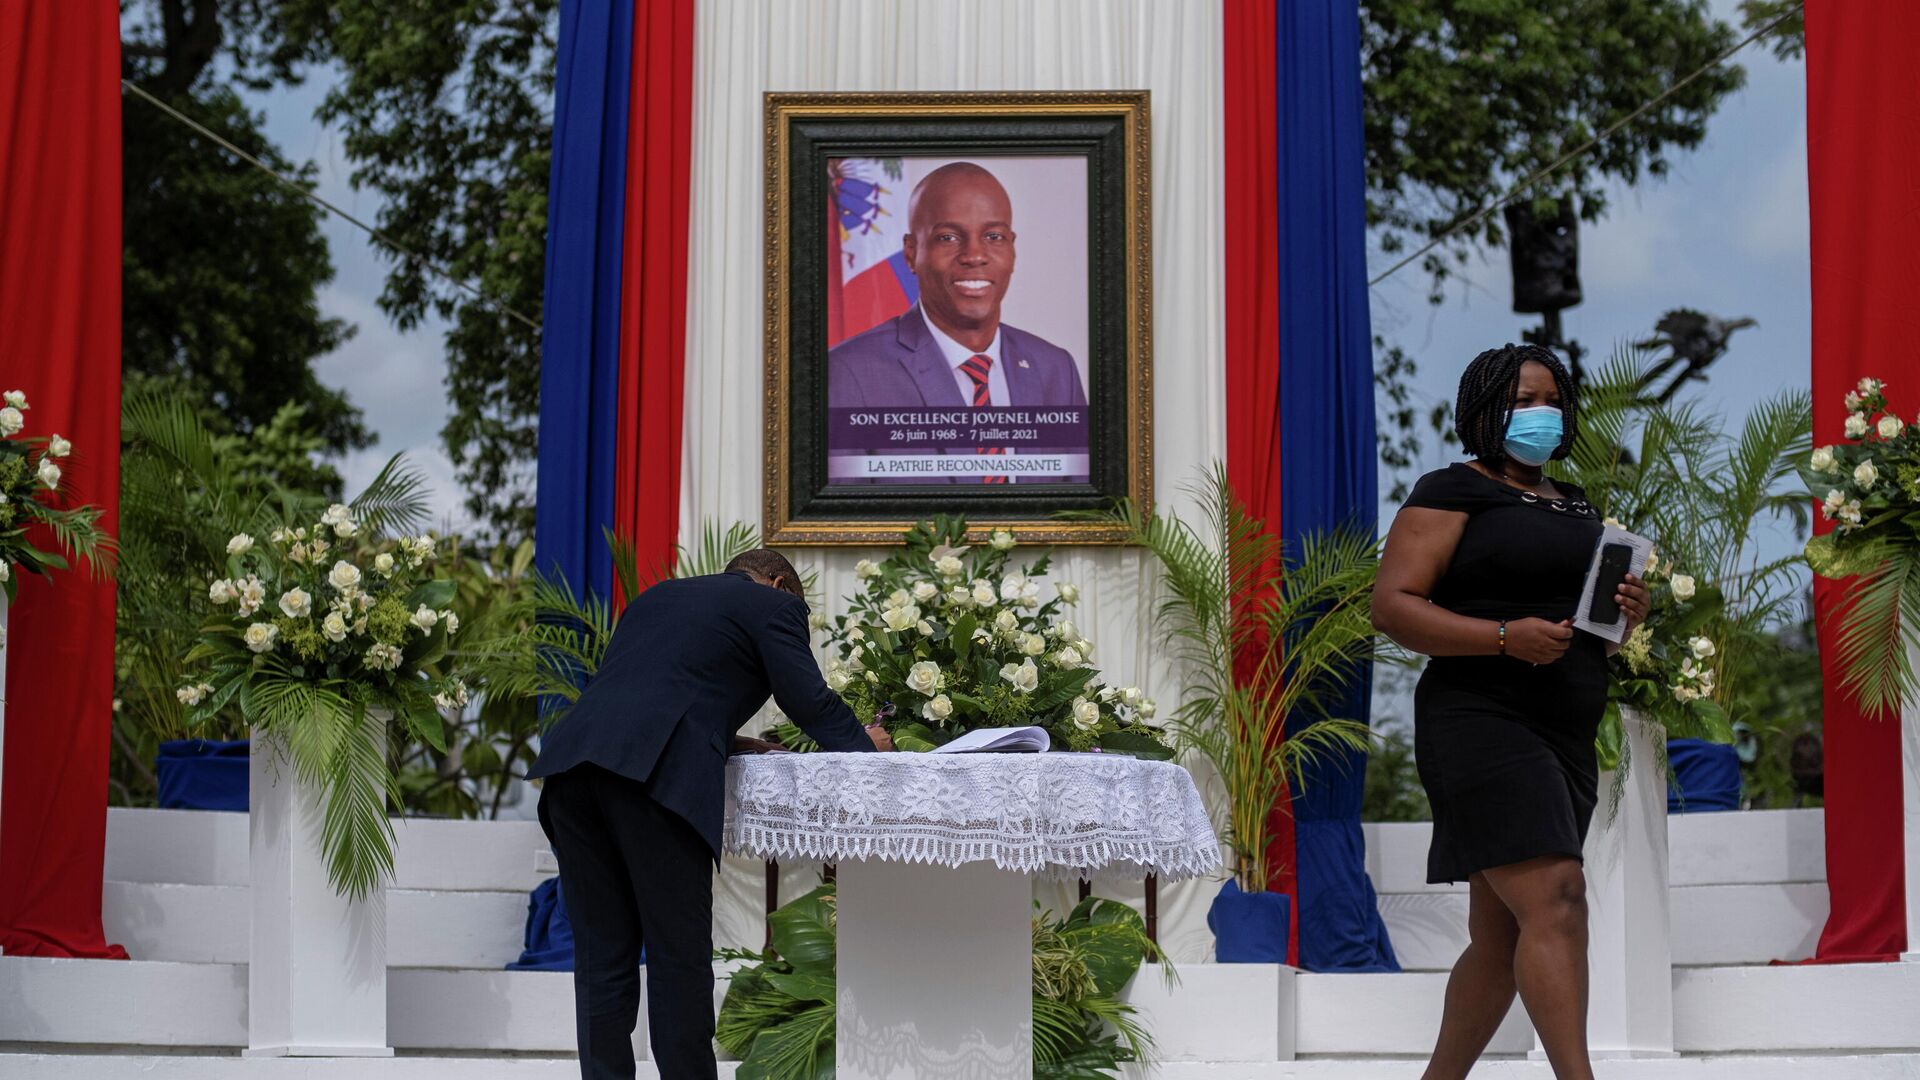 Ceremonioa en honor al expresidente de Haití, Jovenel Moise - Sputnik Mundo, 1920, 13.08.2021